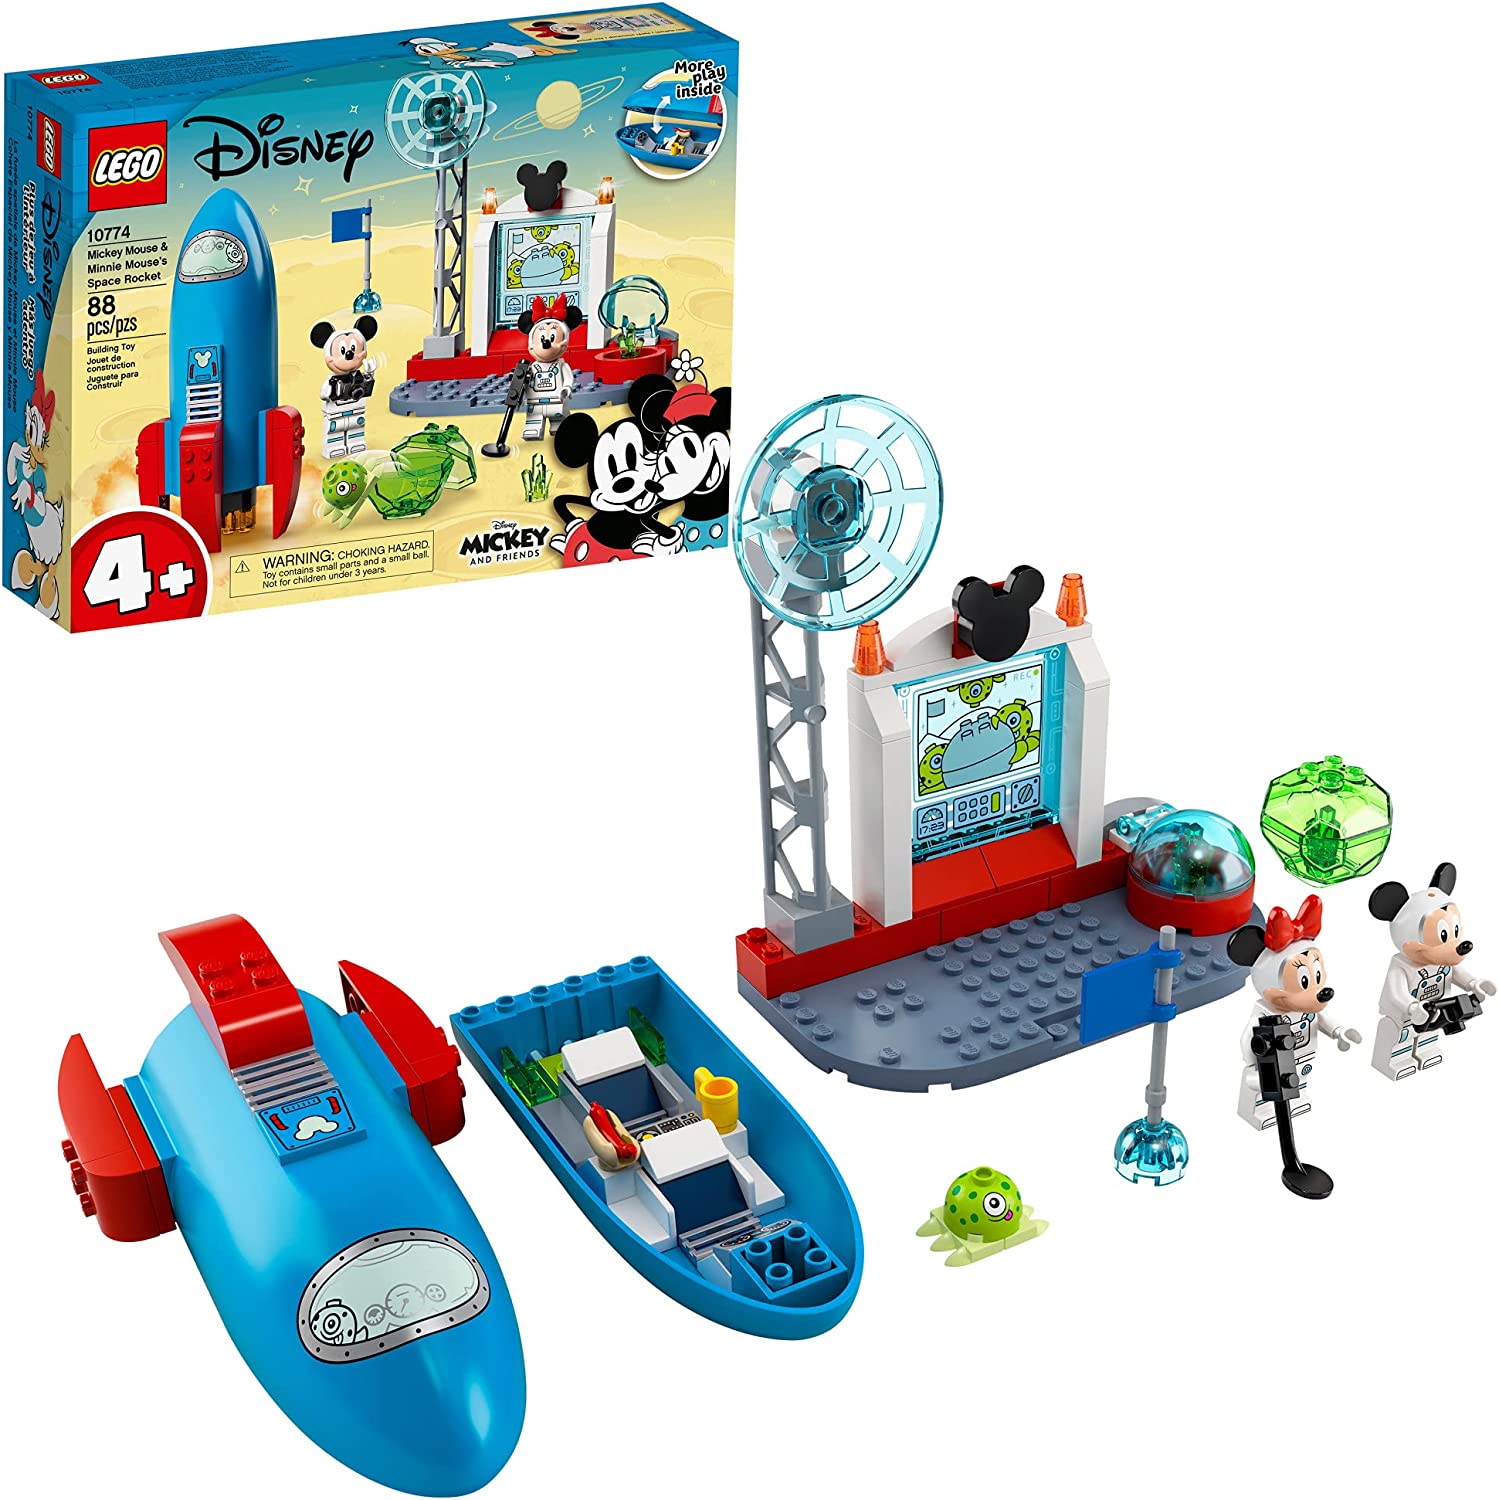 88-Pc LEGO Disney Mickey & Minnie Mouse's Space Rocket Building Kit (10774) $16 + FS w/ Amazon Prime or FS on $25+